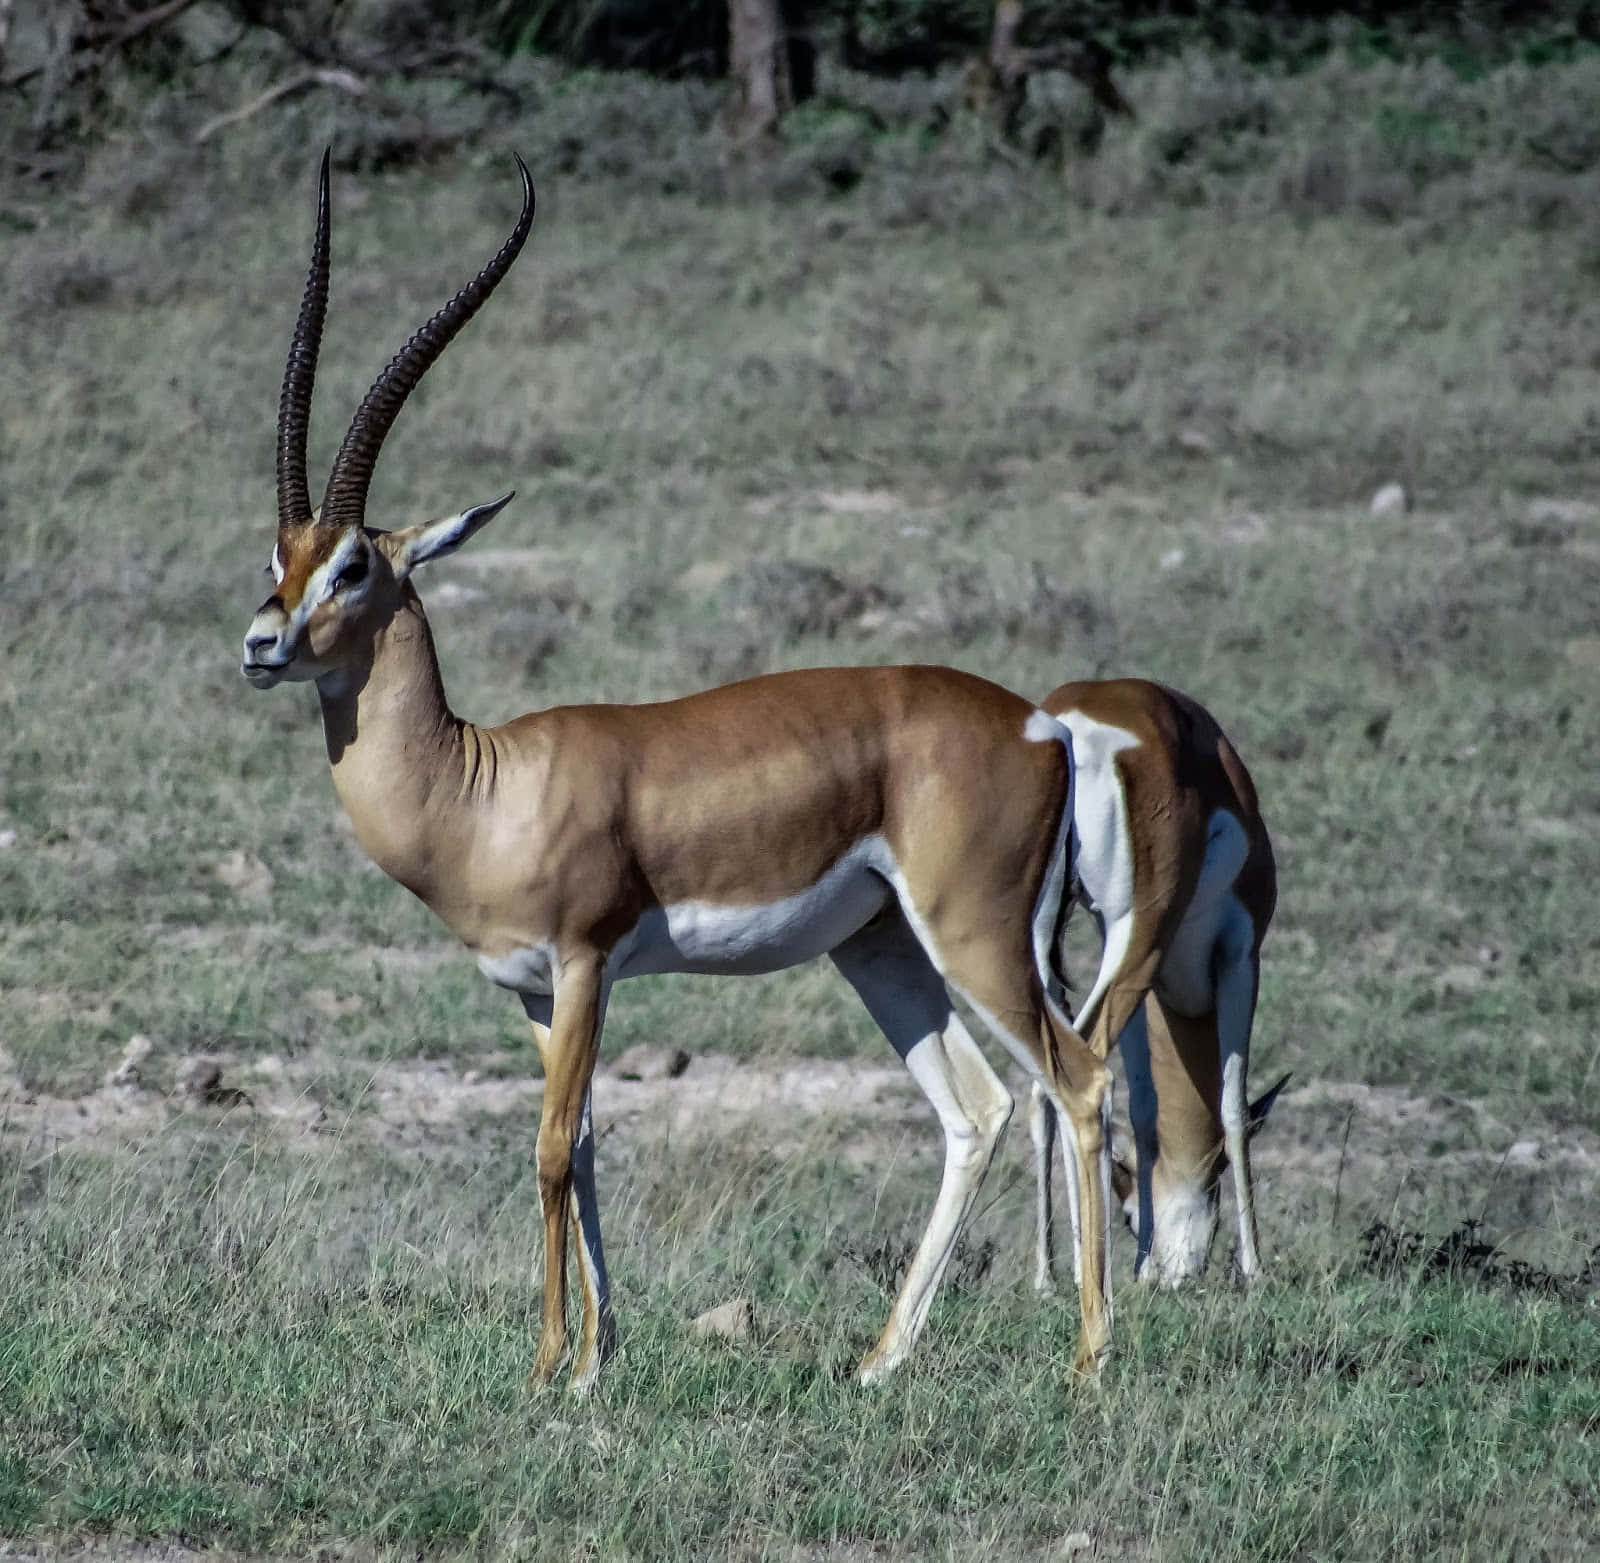 Majestic Gazelle In Natural Habitat Wallpaper